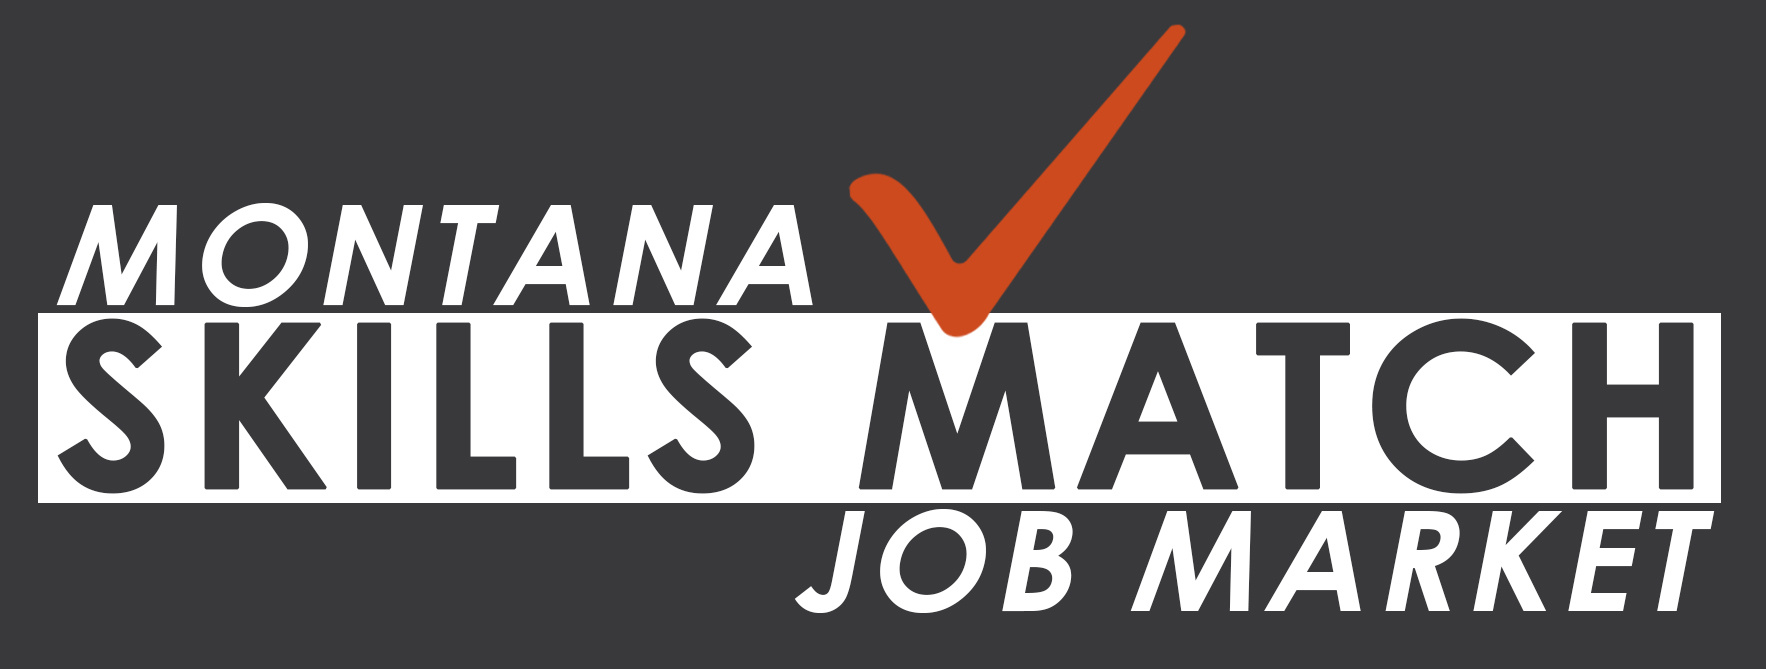 MT_SkillsMatch_JobMarket